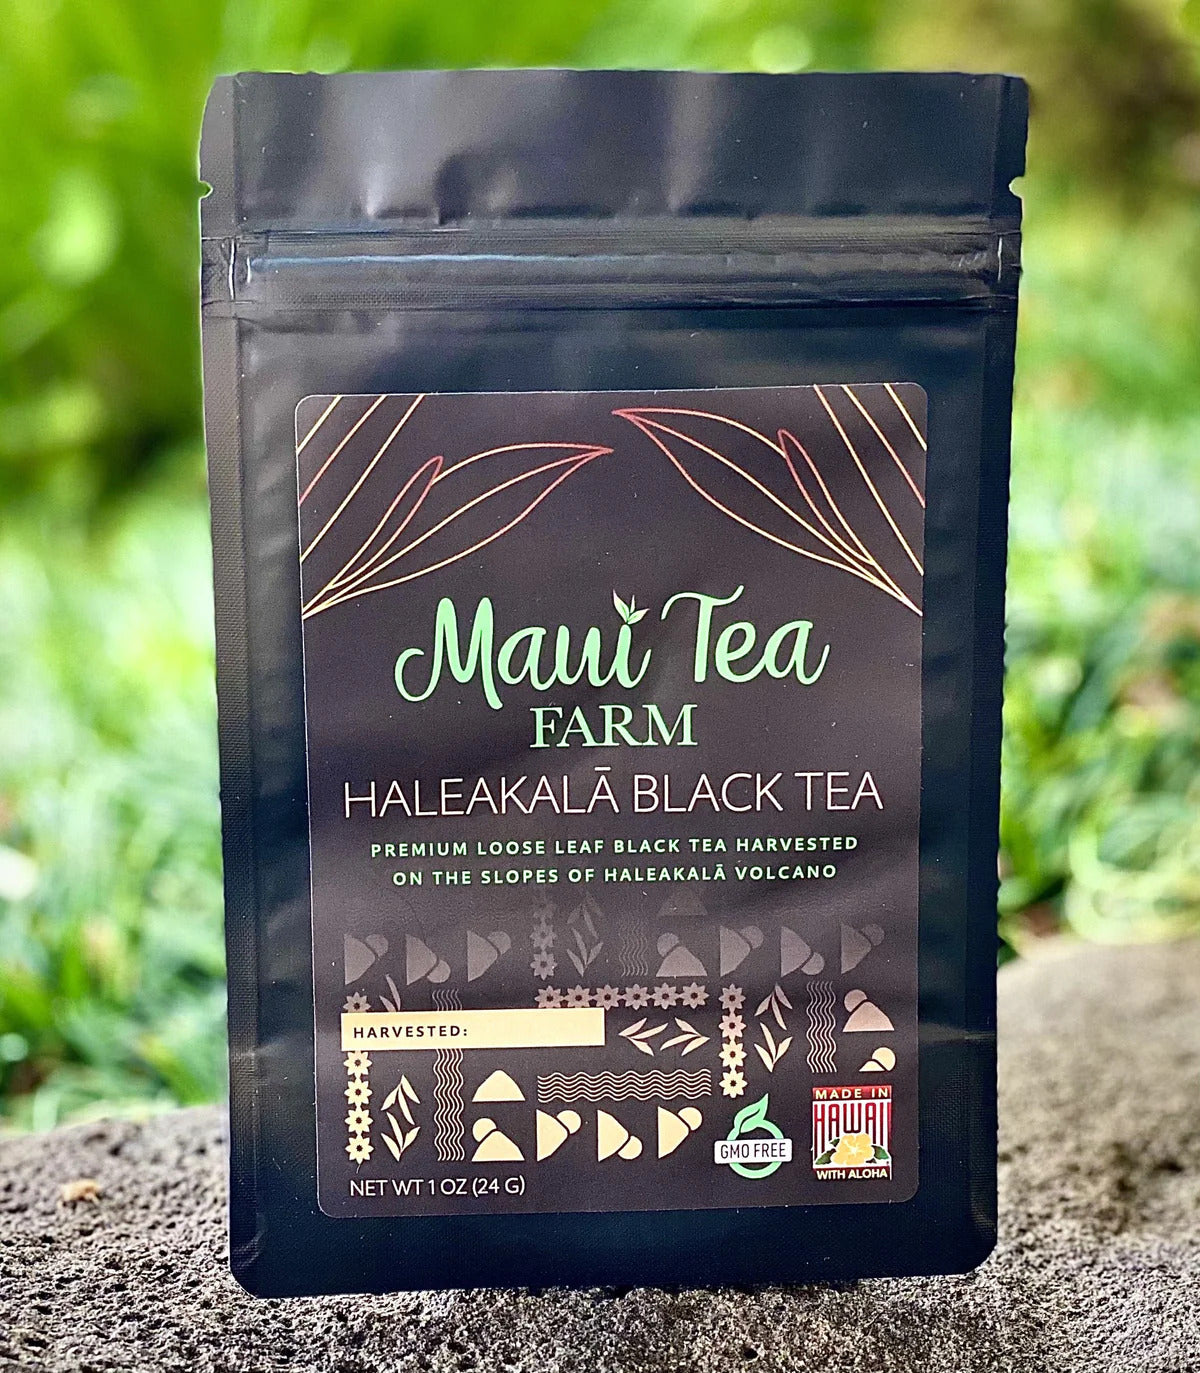 Pop-Up Mākeke - PonoInfusions - Organically Grown Haleakala Black Tea